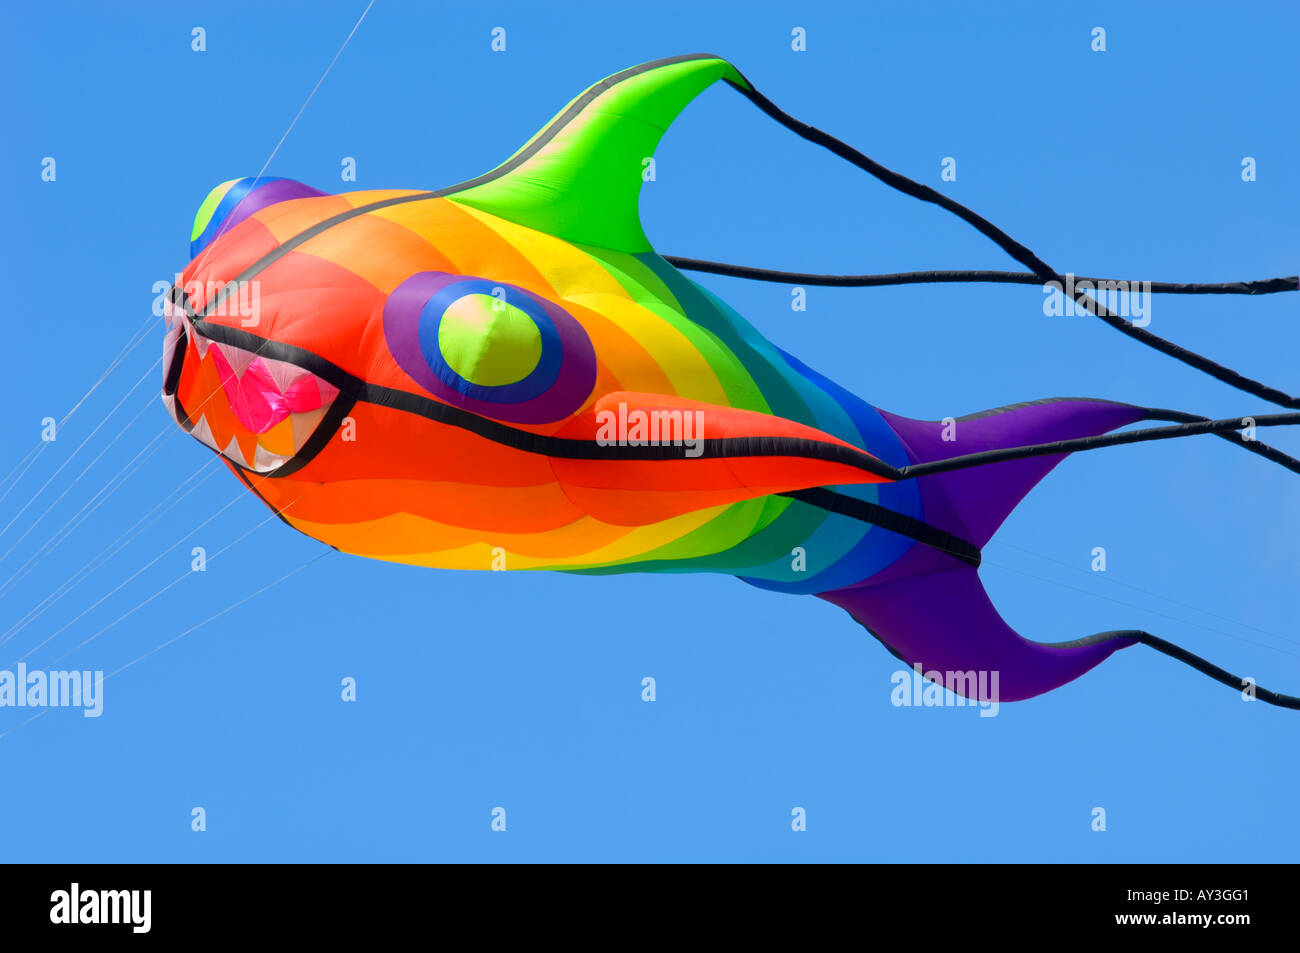 Colourful fish kite Stock Photo - Alamy